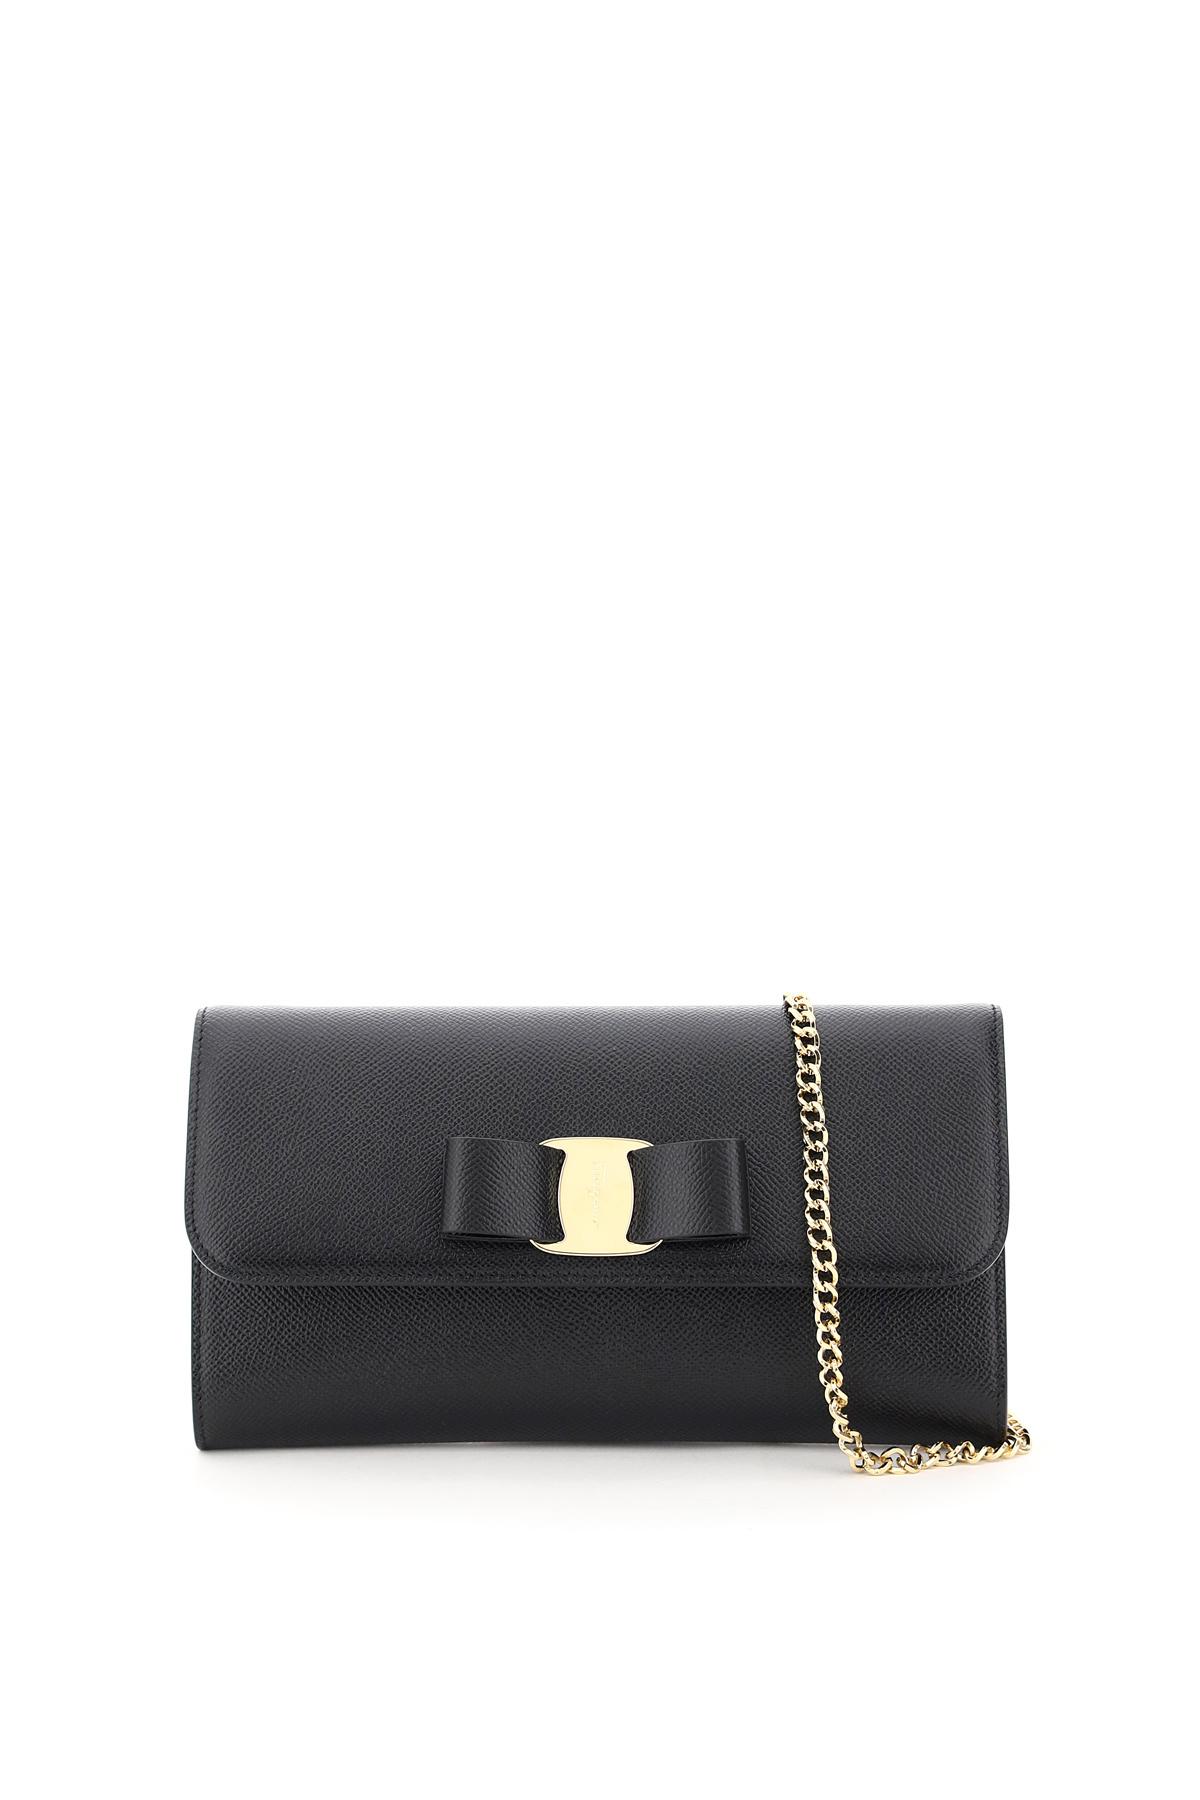 Ferragamo Vara Bow Minibag in Black | Lyst